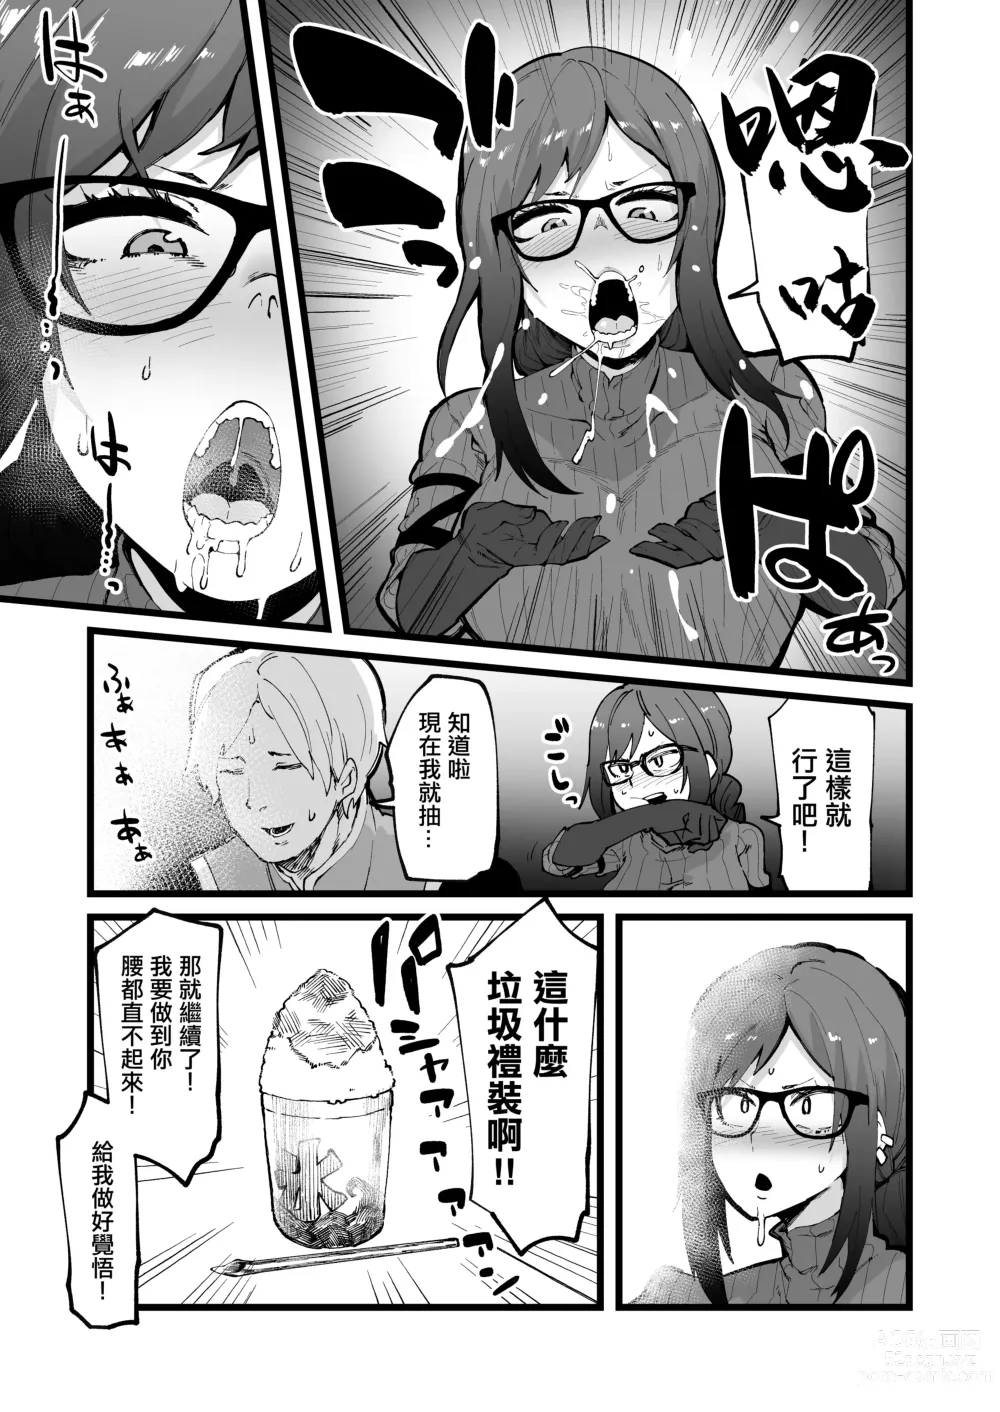 Page 7 of doujinshi Mikogashi